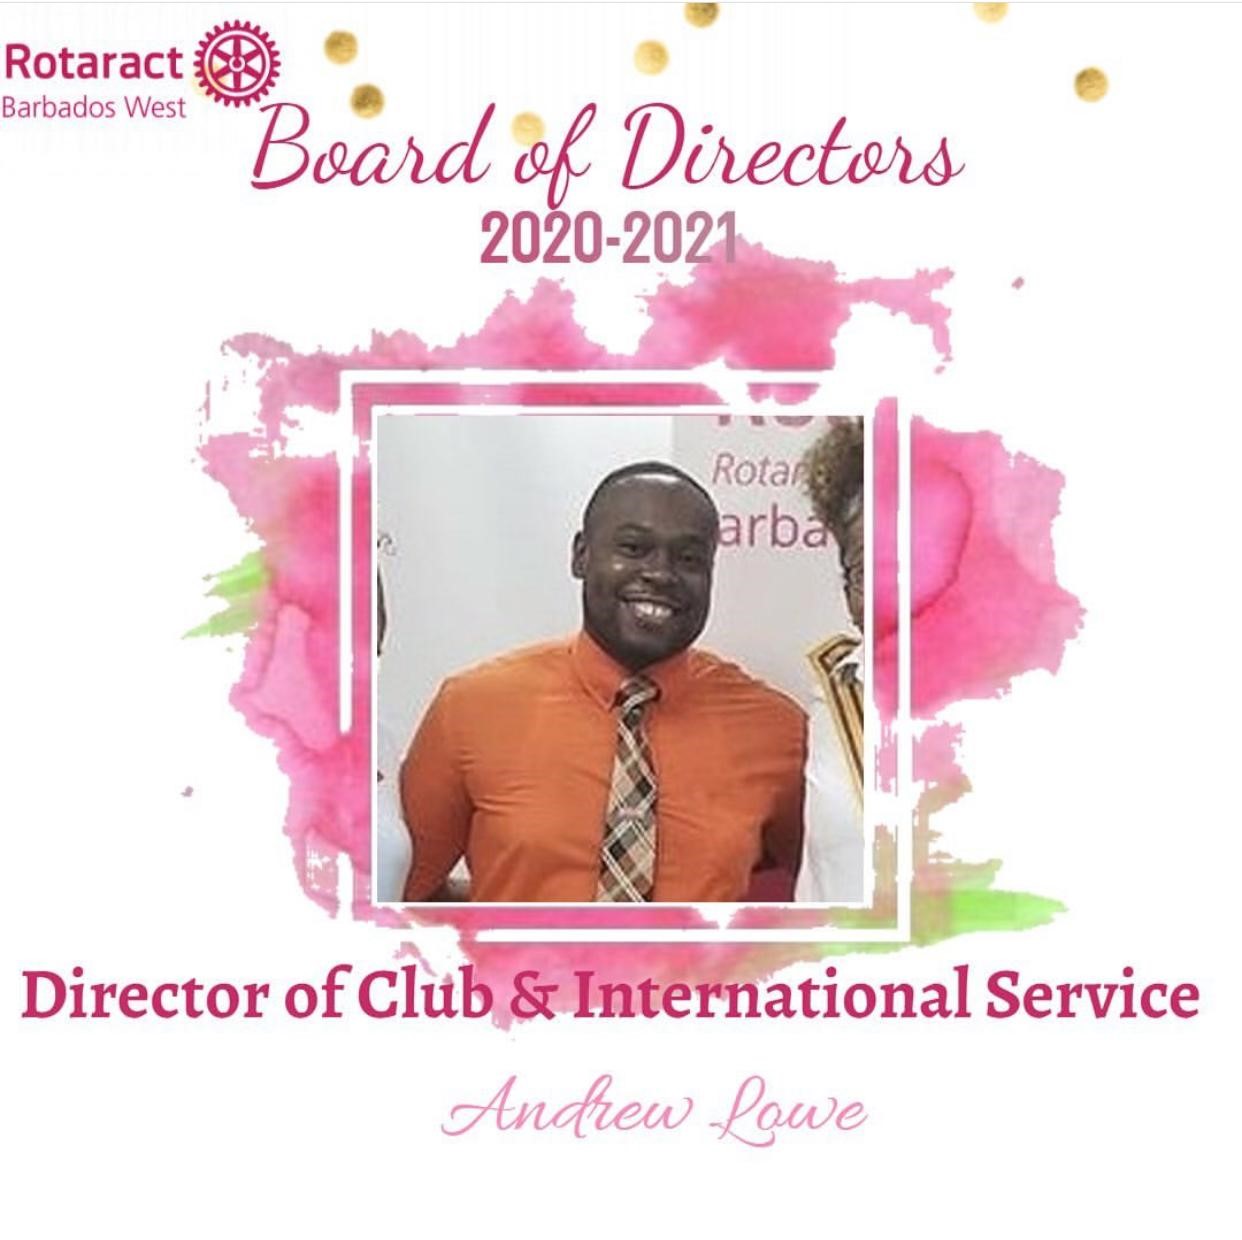 International Service Director